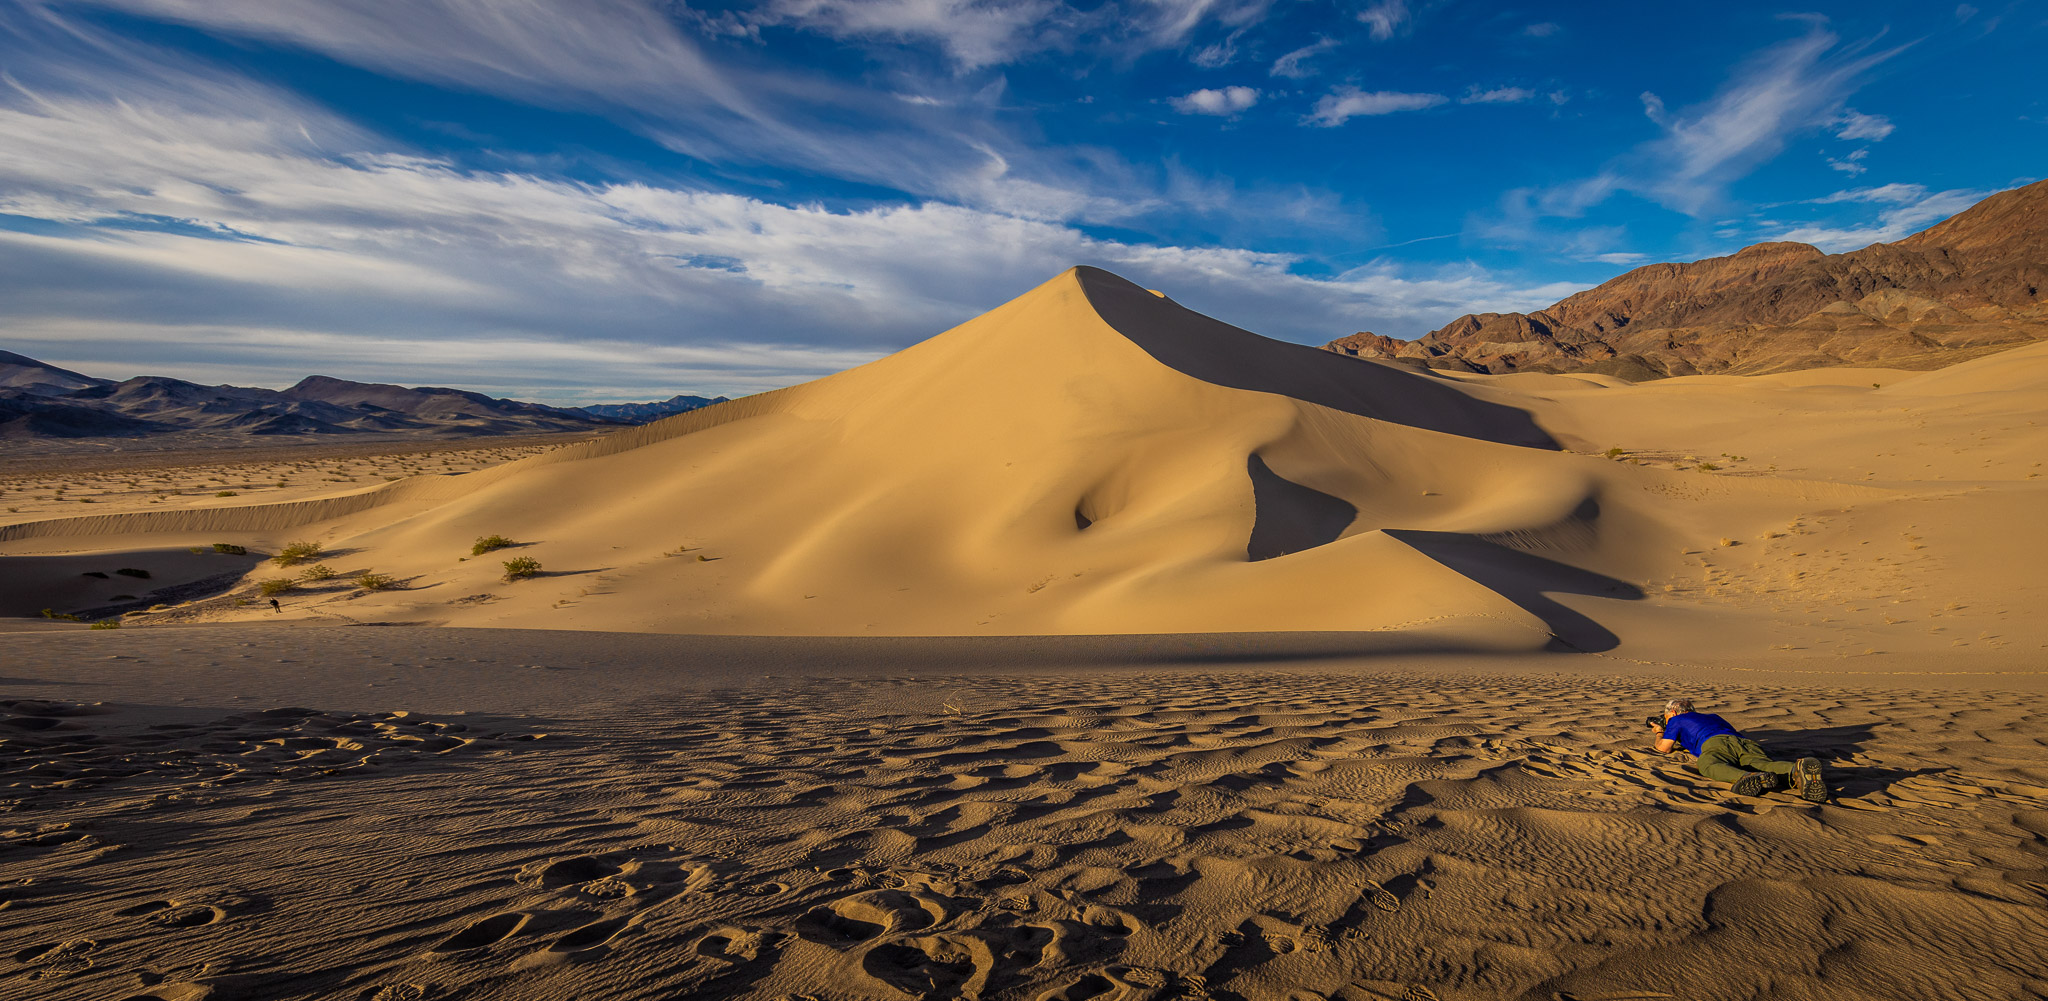 Ibex Dunes & a photographer in their habitat